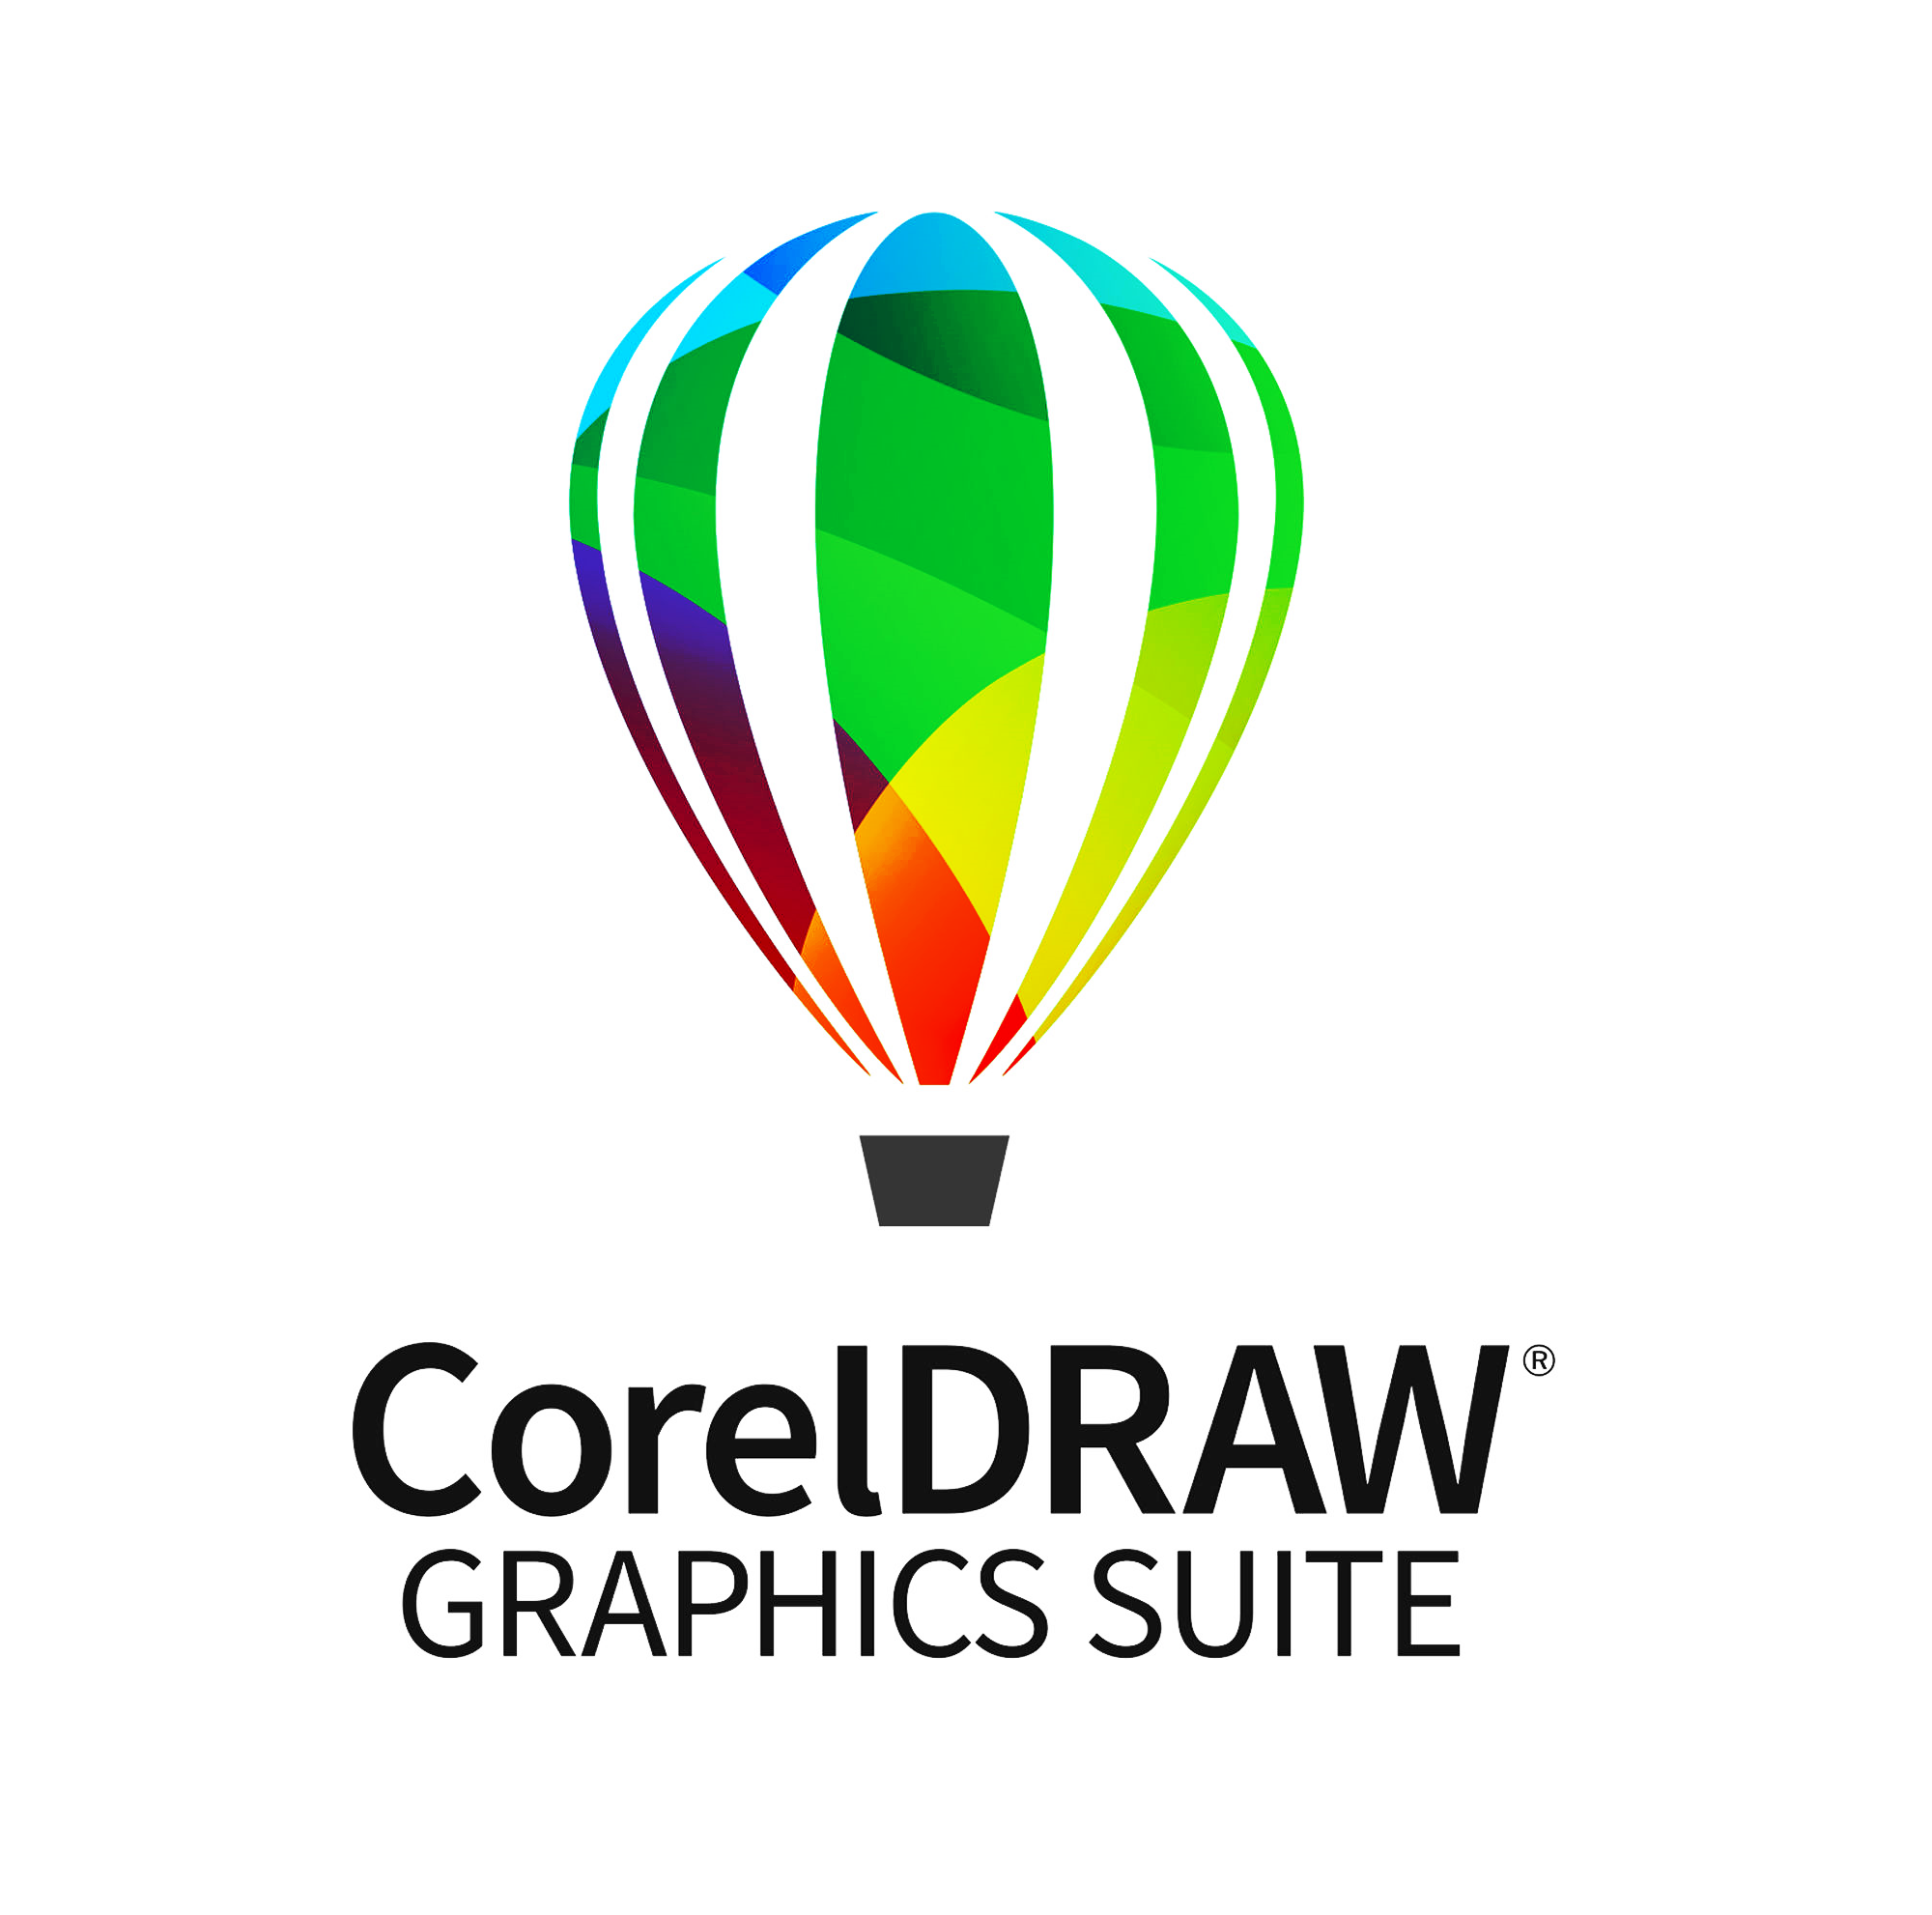 CorelDRAW Graphic Suite 22.2.0.532 Crack With License Key [2021]